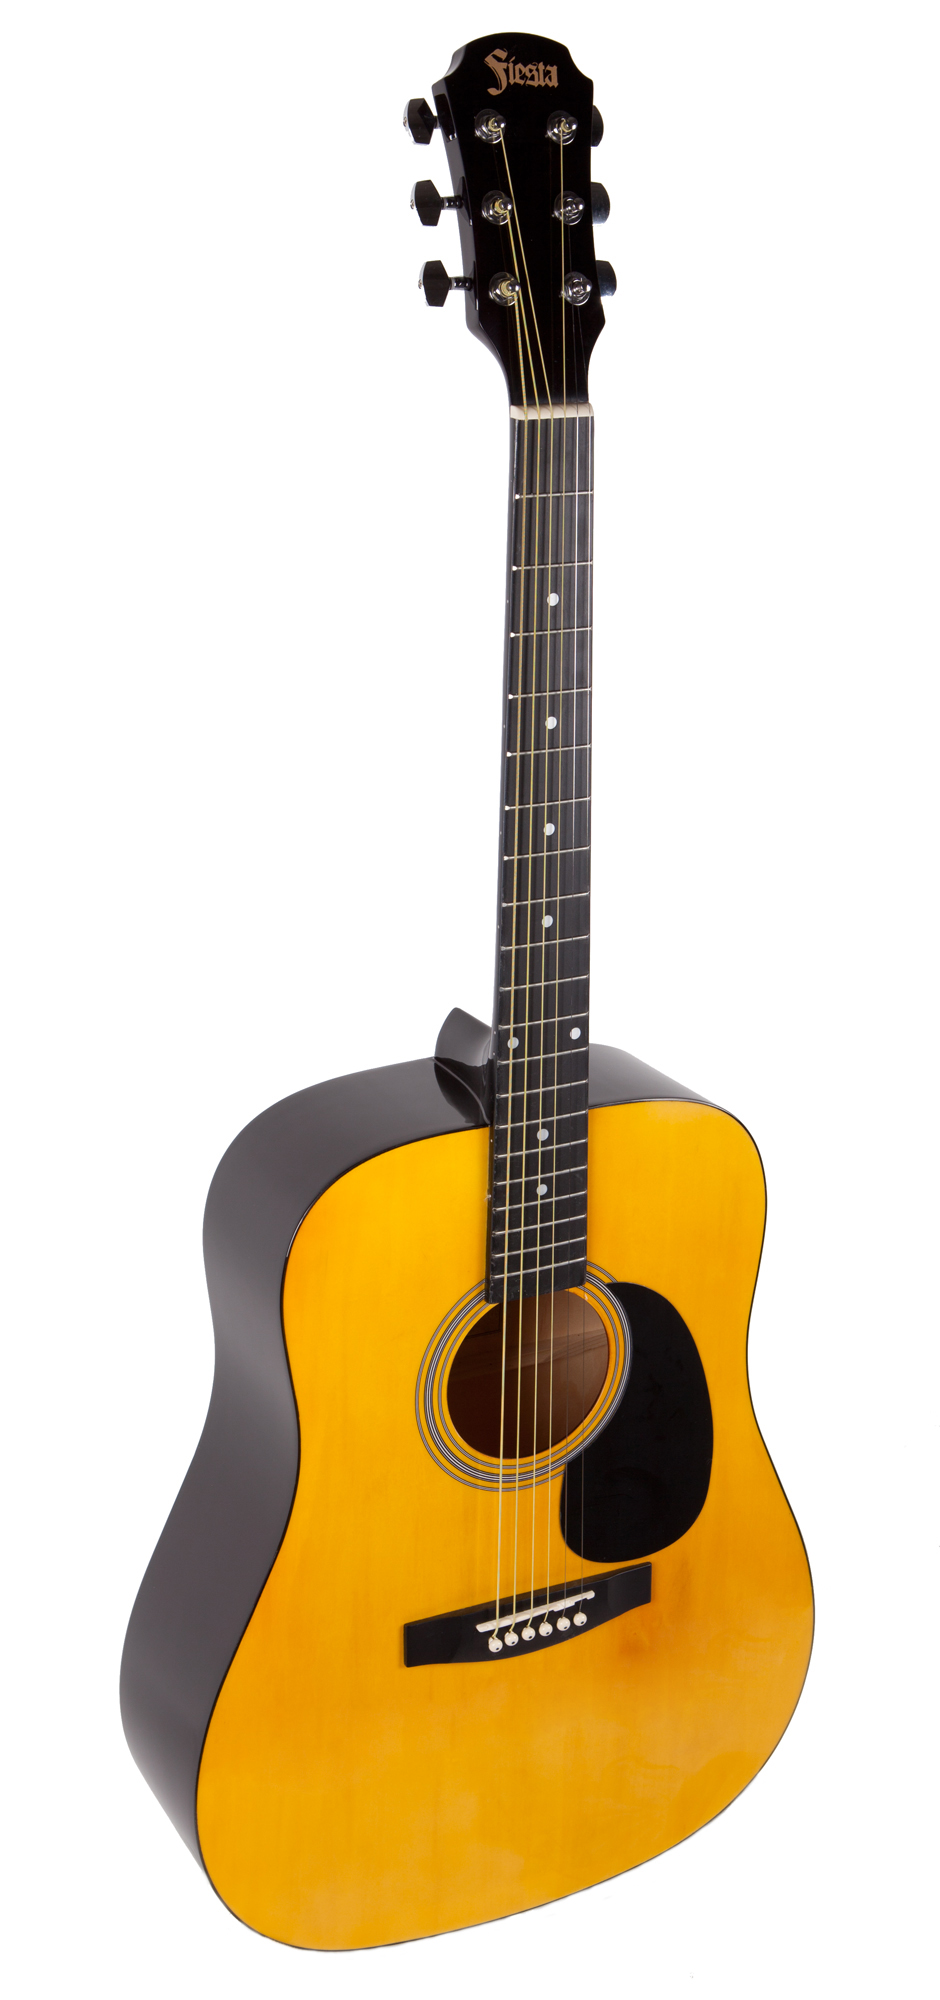 Акустические гитары Aria FIESTA FST-300 N классические гитары kremona fiesta fs spruce artist series